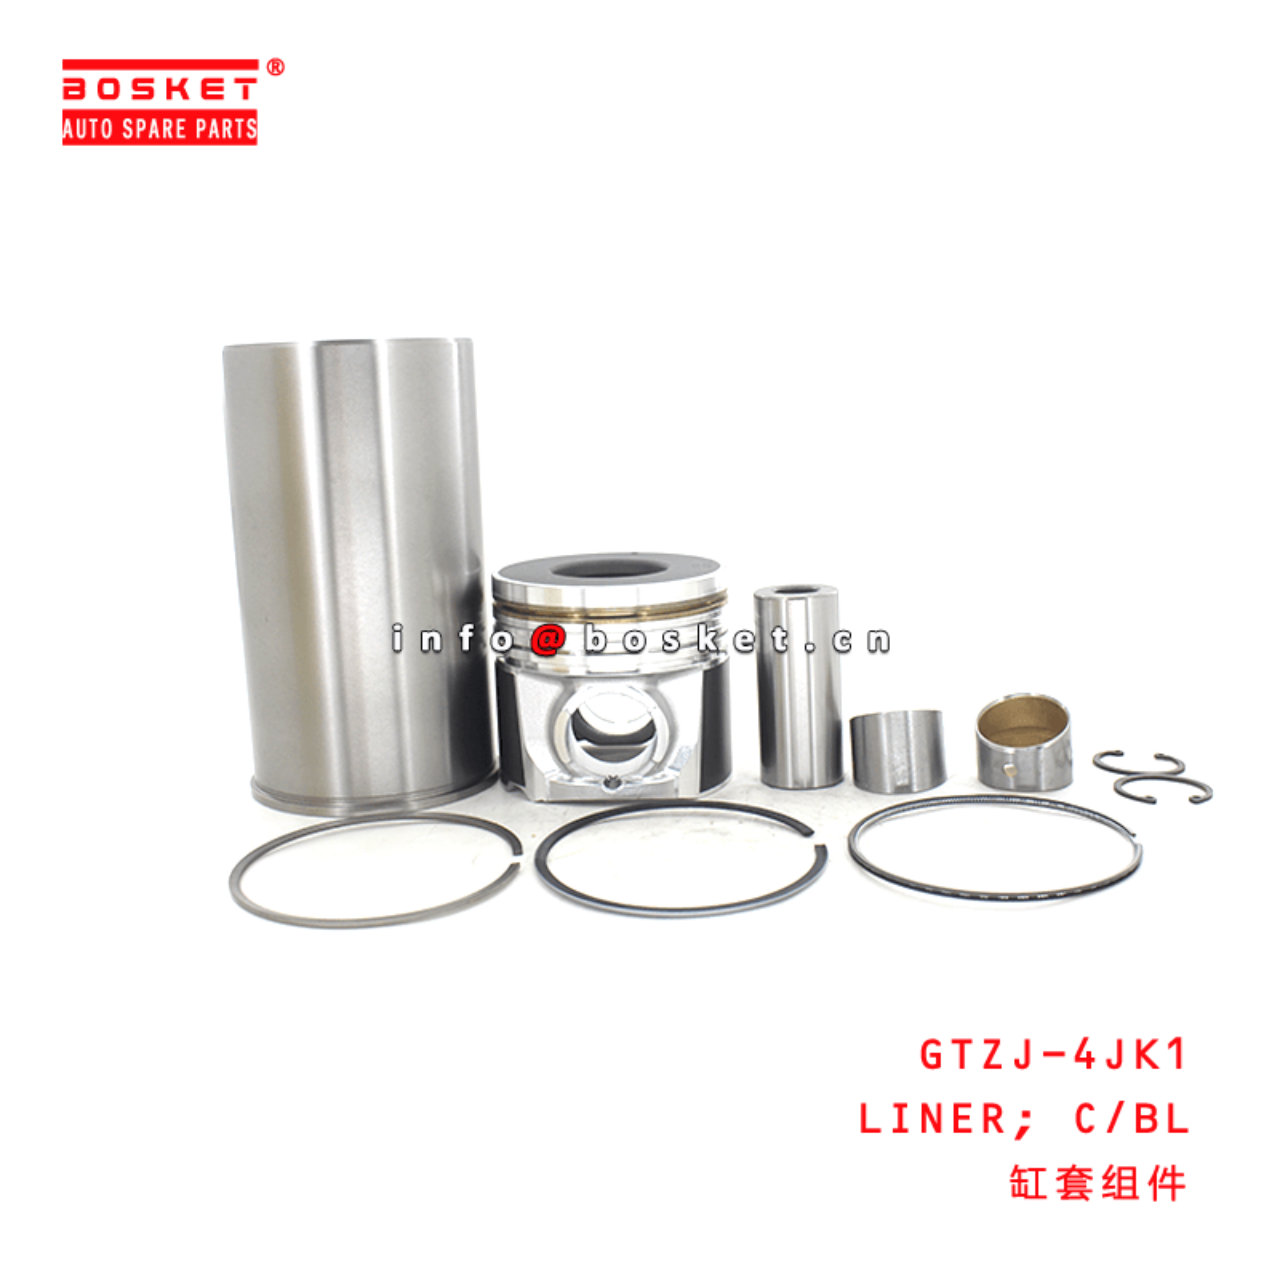  GTZJ-4JK1 Cylinder Block Liner Suitable for ISUZU 4JK1